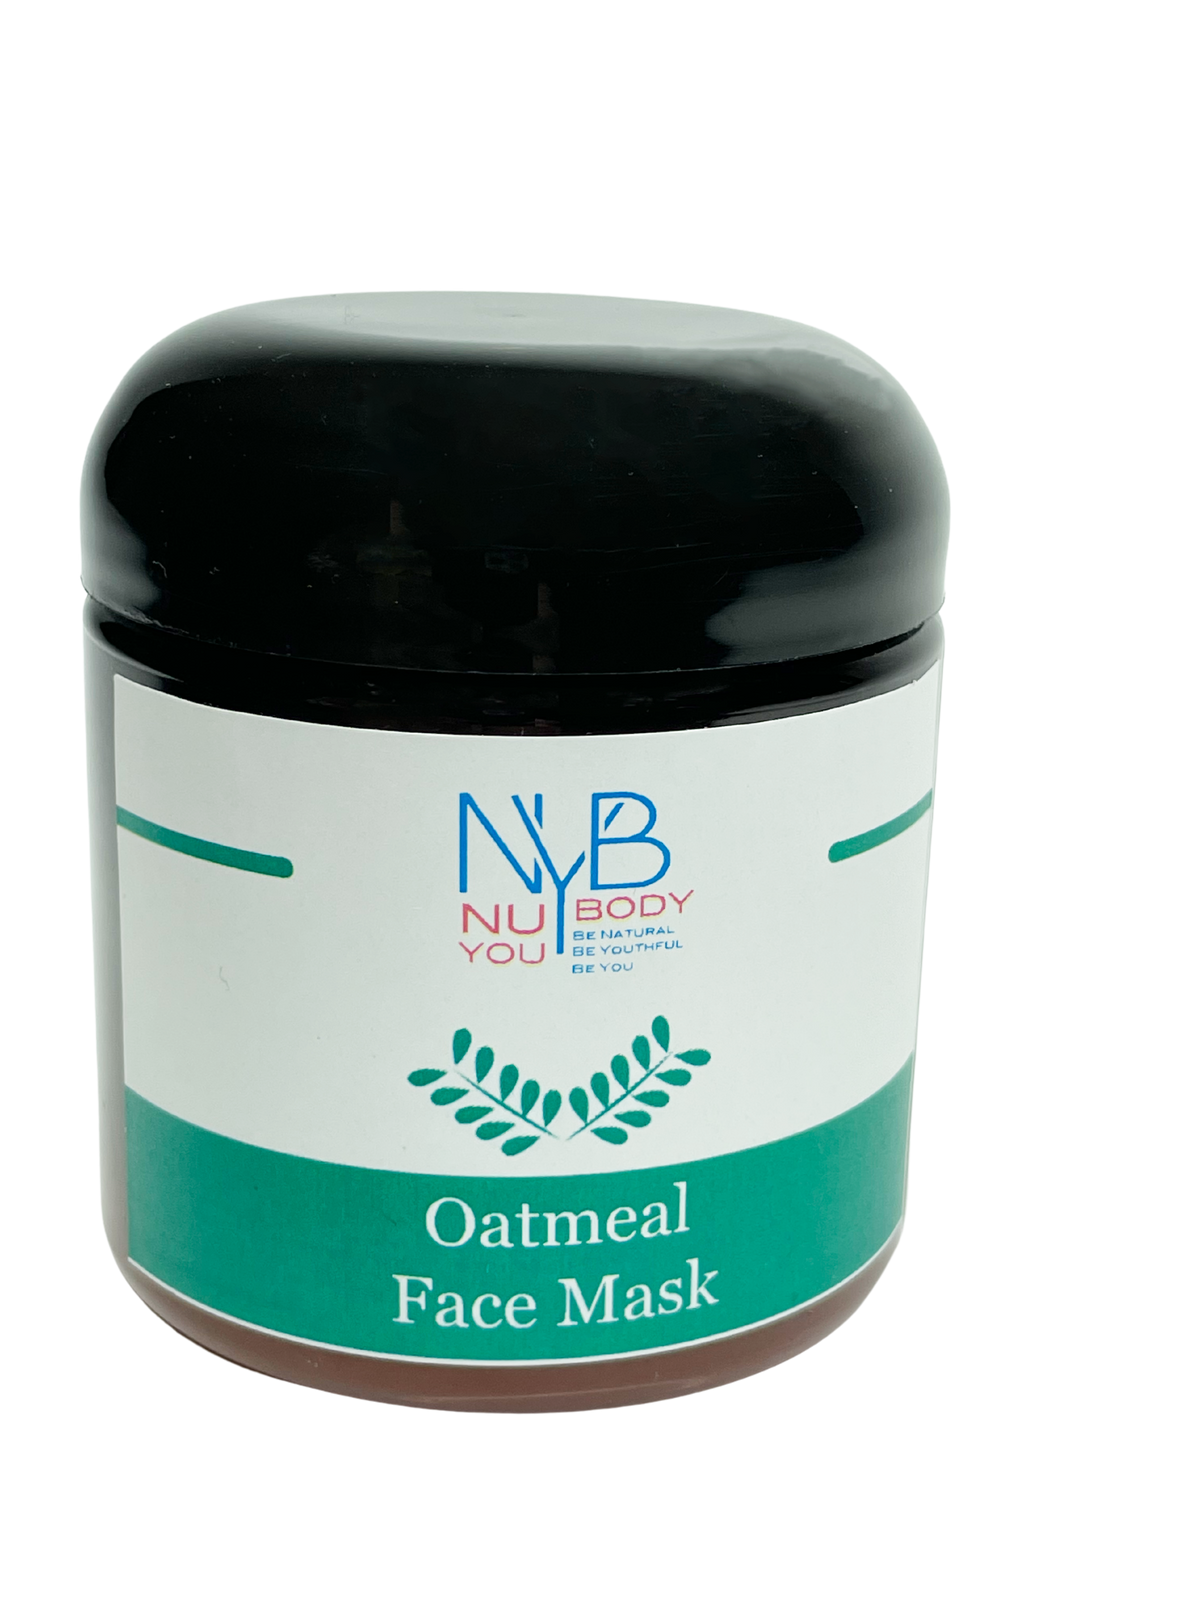 Oatmeal Face Mask